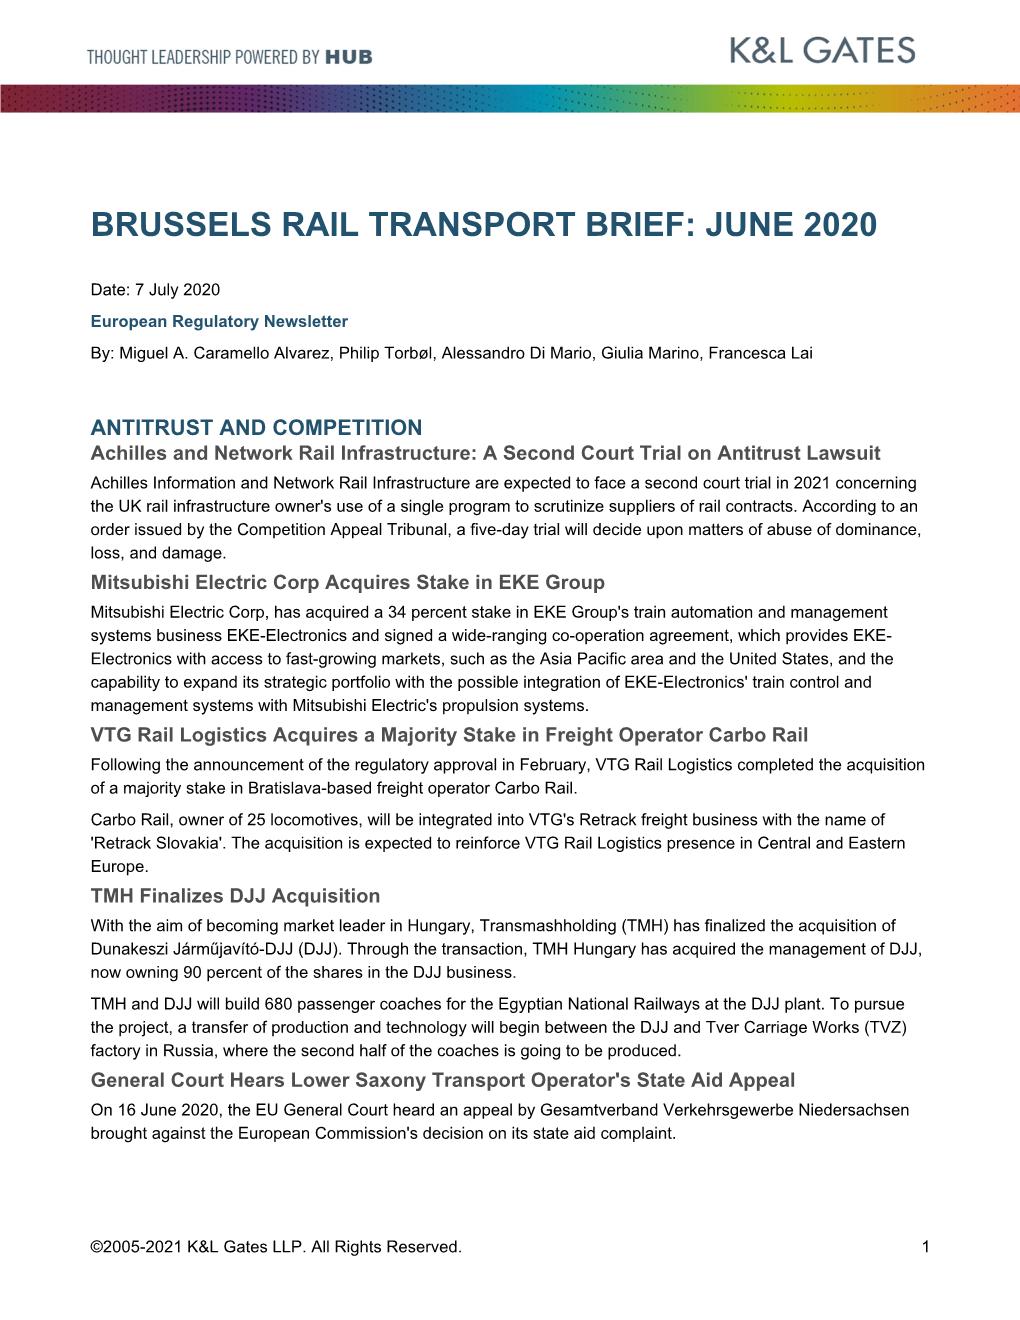 Brussels Rail Transport Brief: June 2020